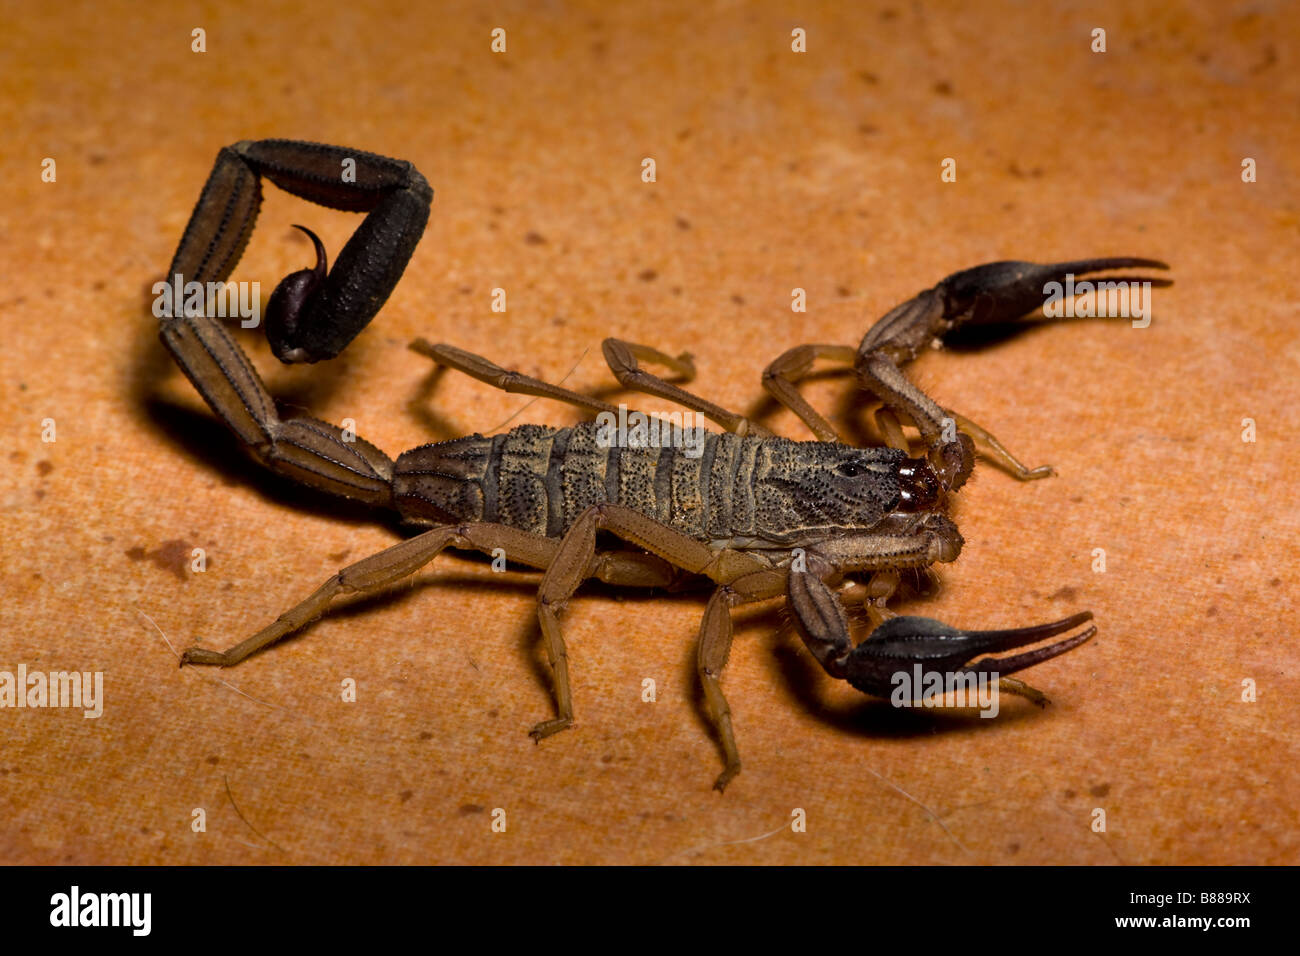 A black scorpion (Centruroides limbatus) found on the kitchen floor in Playas del Coco, Guanacaste, Costa Rica. Stock Photo